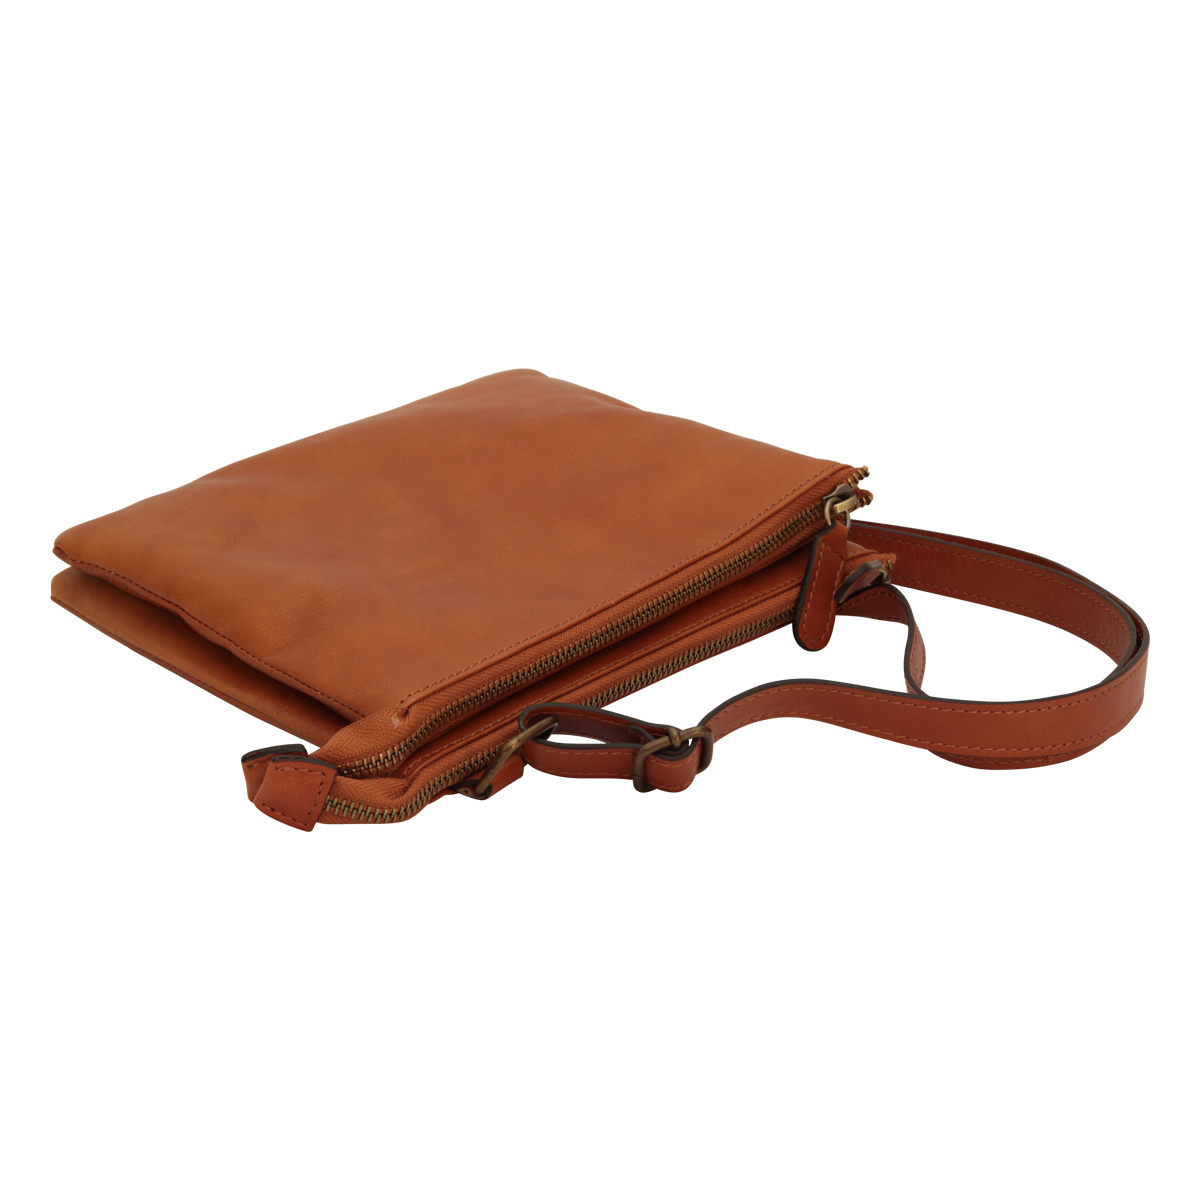 Full grain calfskin shoulder bag - brown colonial | 413489CO US | Old Angler Firenze